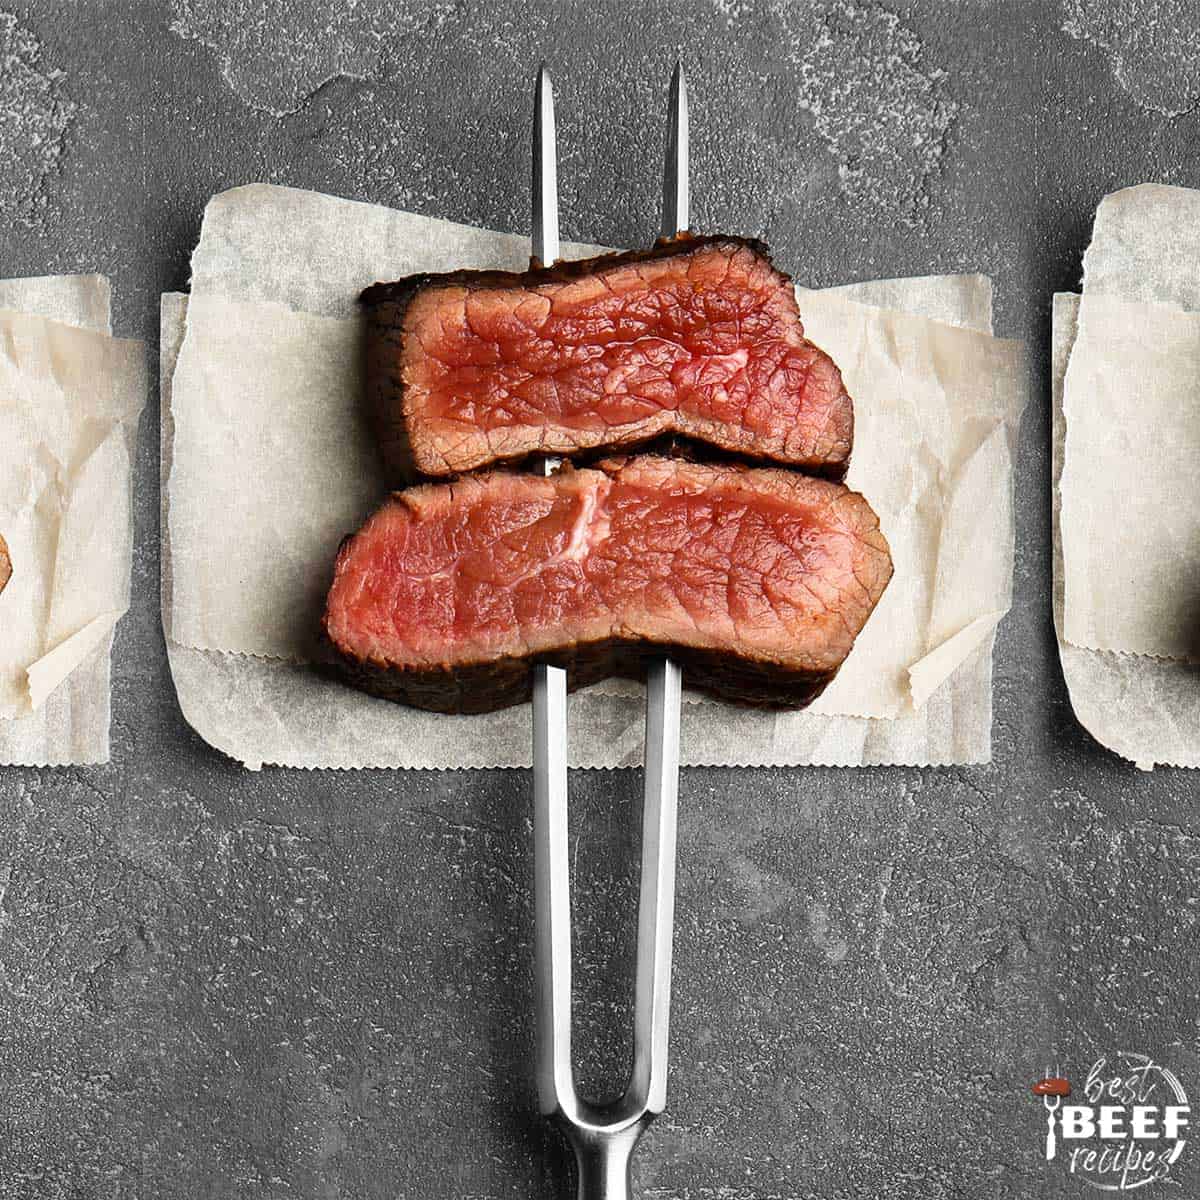 Medium rare steak on a beef fork